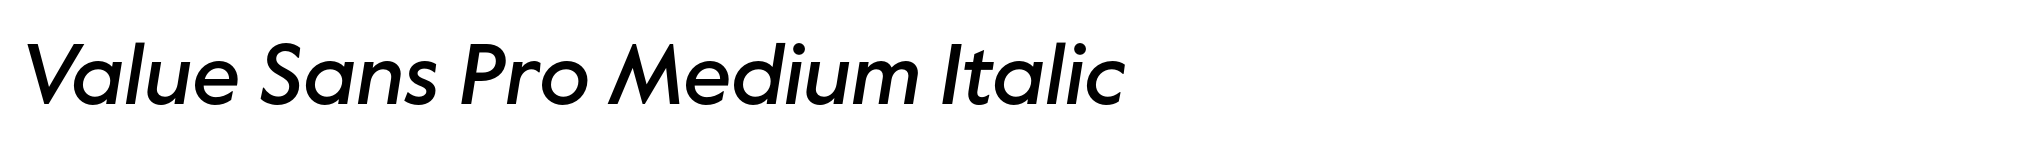 Value Sans Pro Medium Italic image